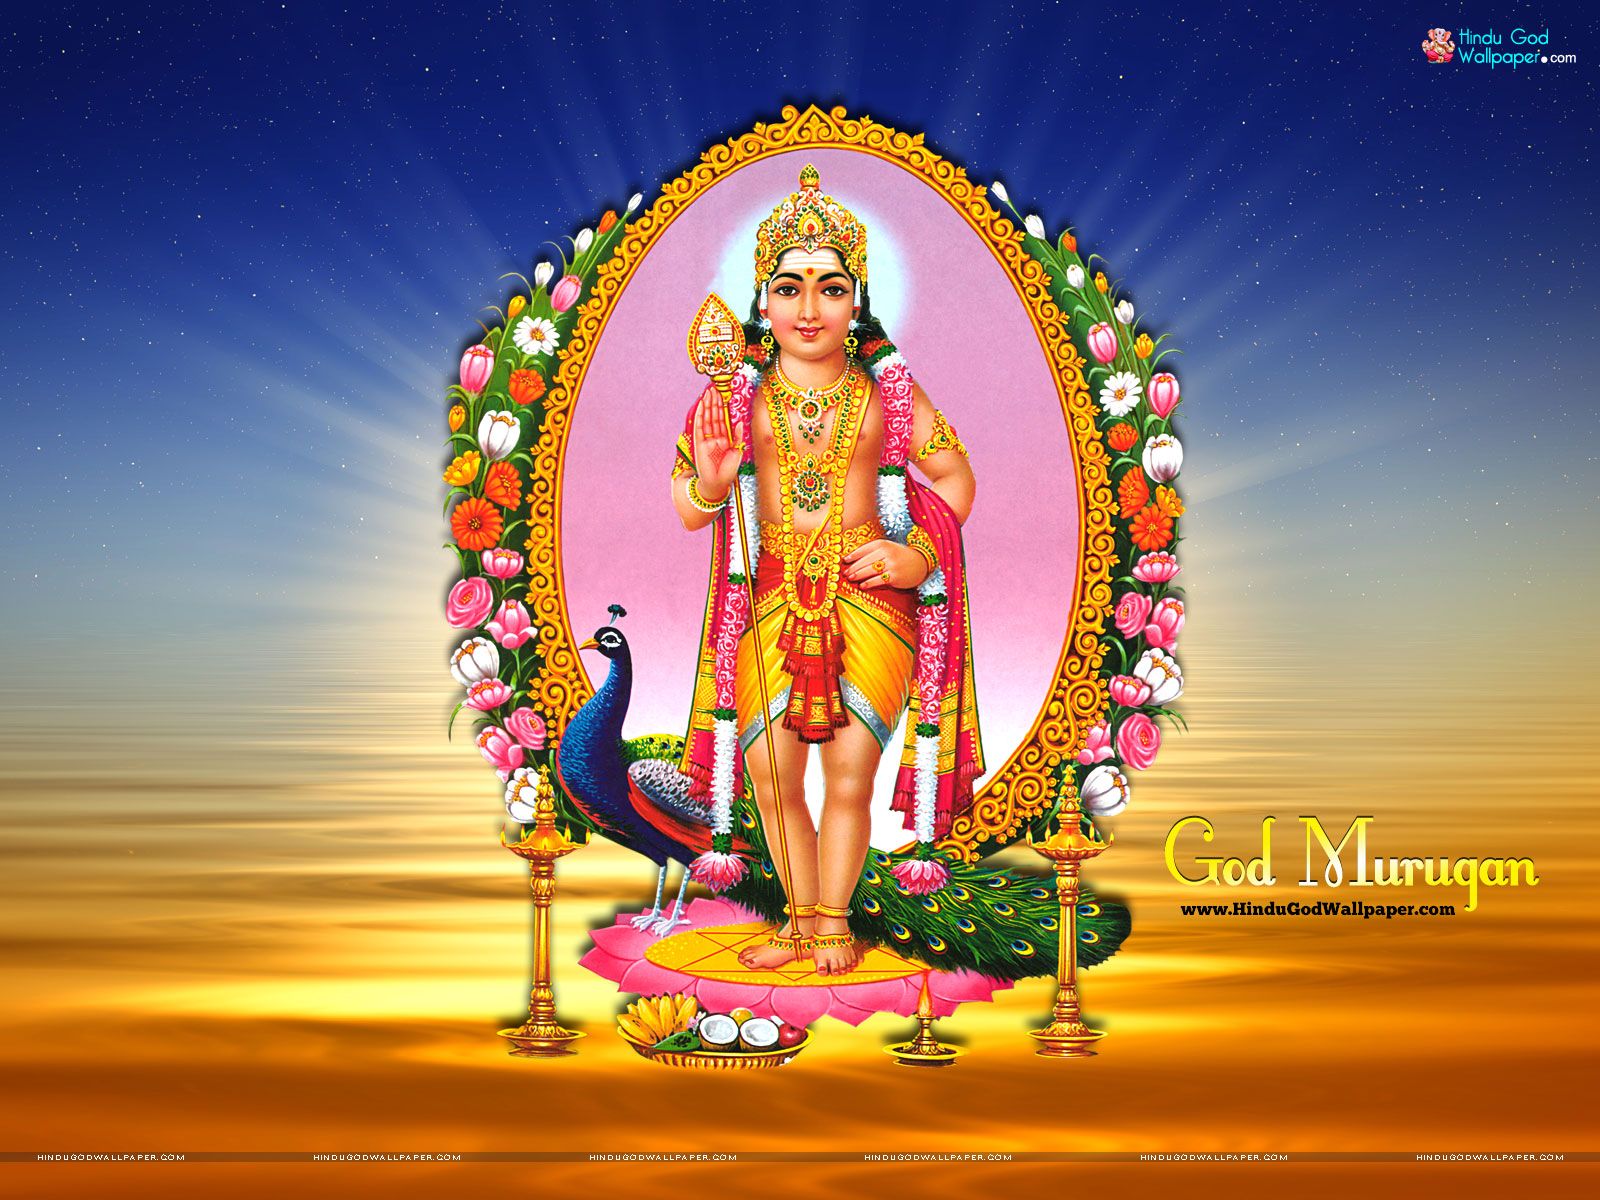 Tamil God Murugan Wallpaper Image Photos